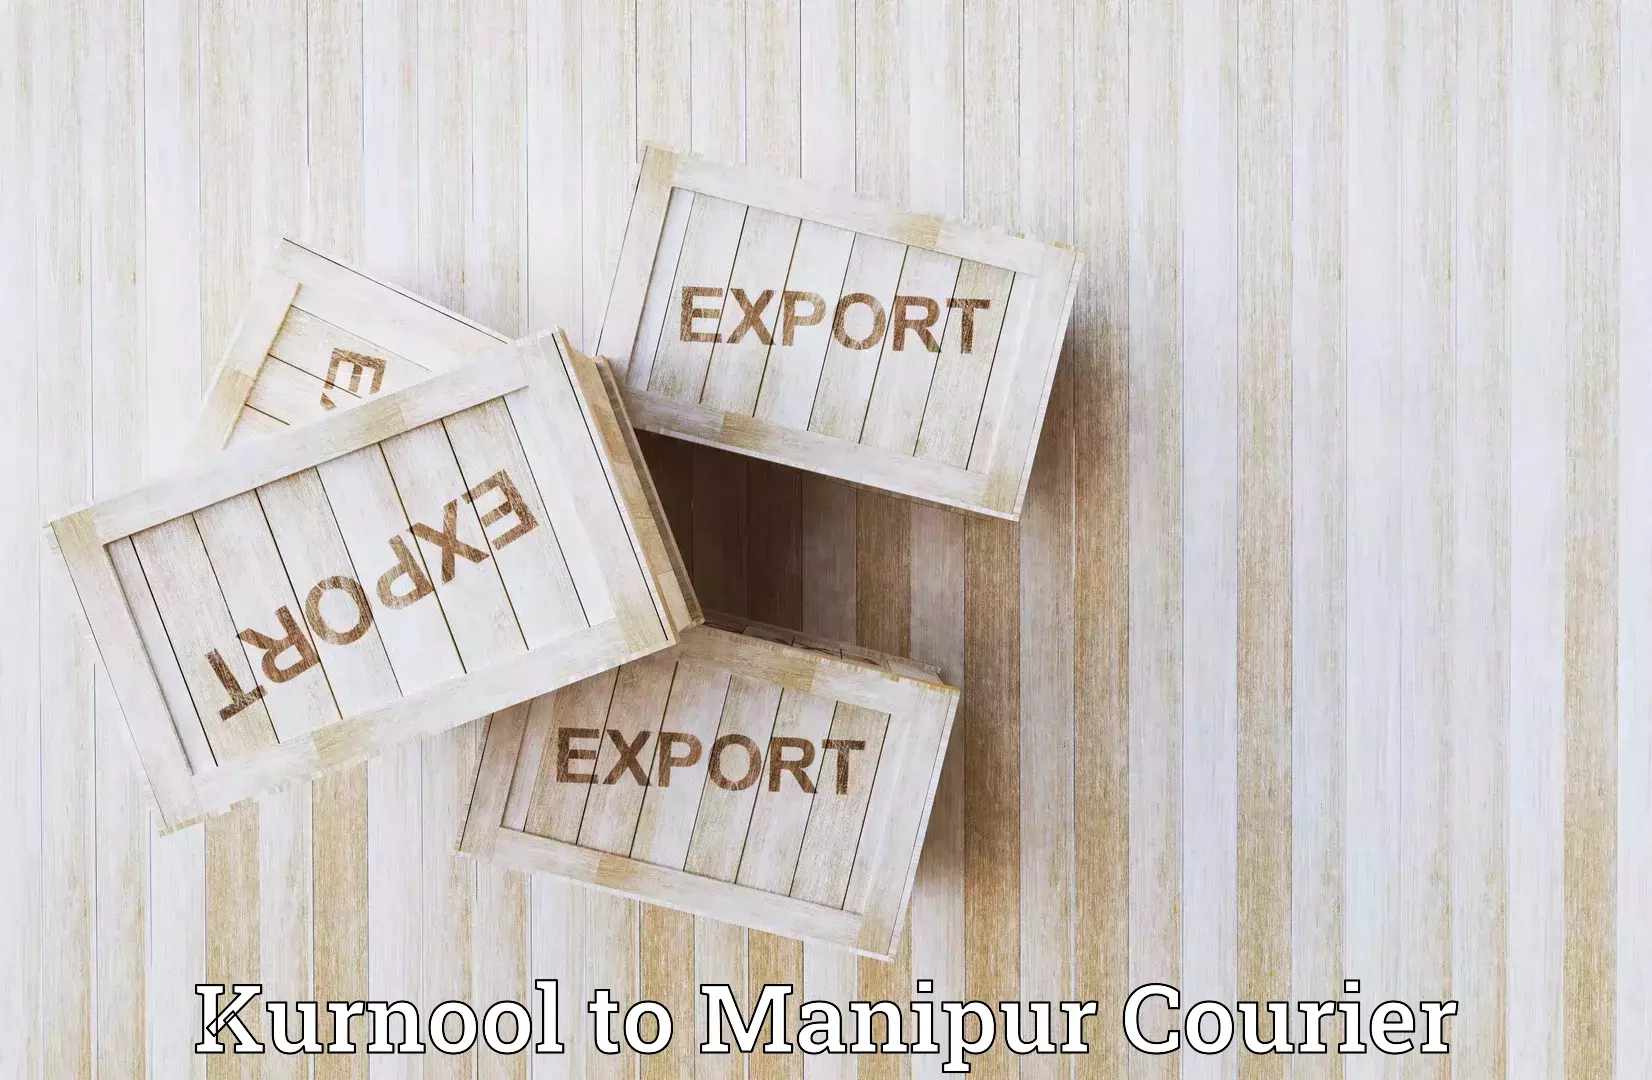 Efficient order fulfillment Kurnool to Manipur